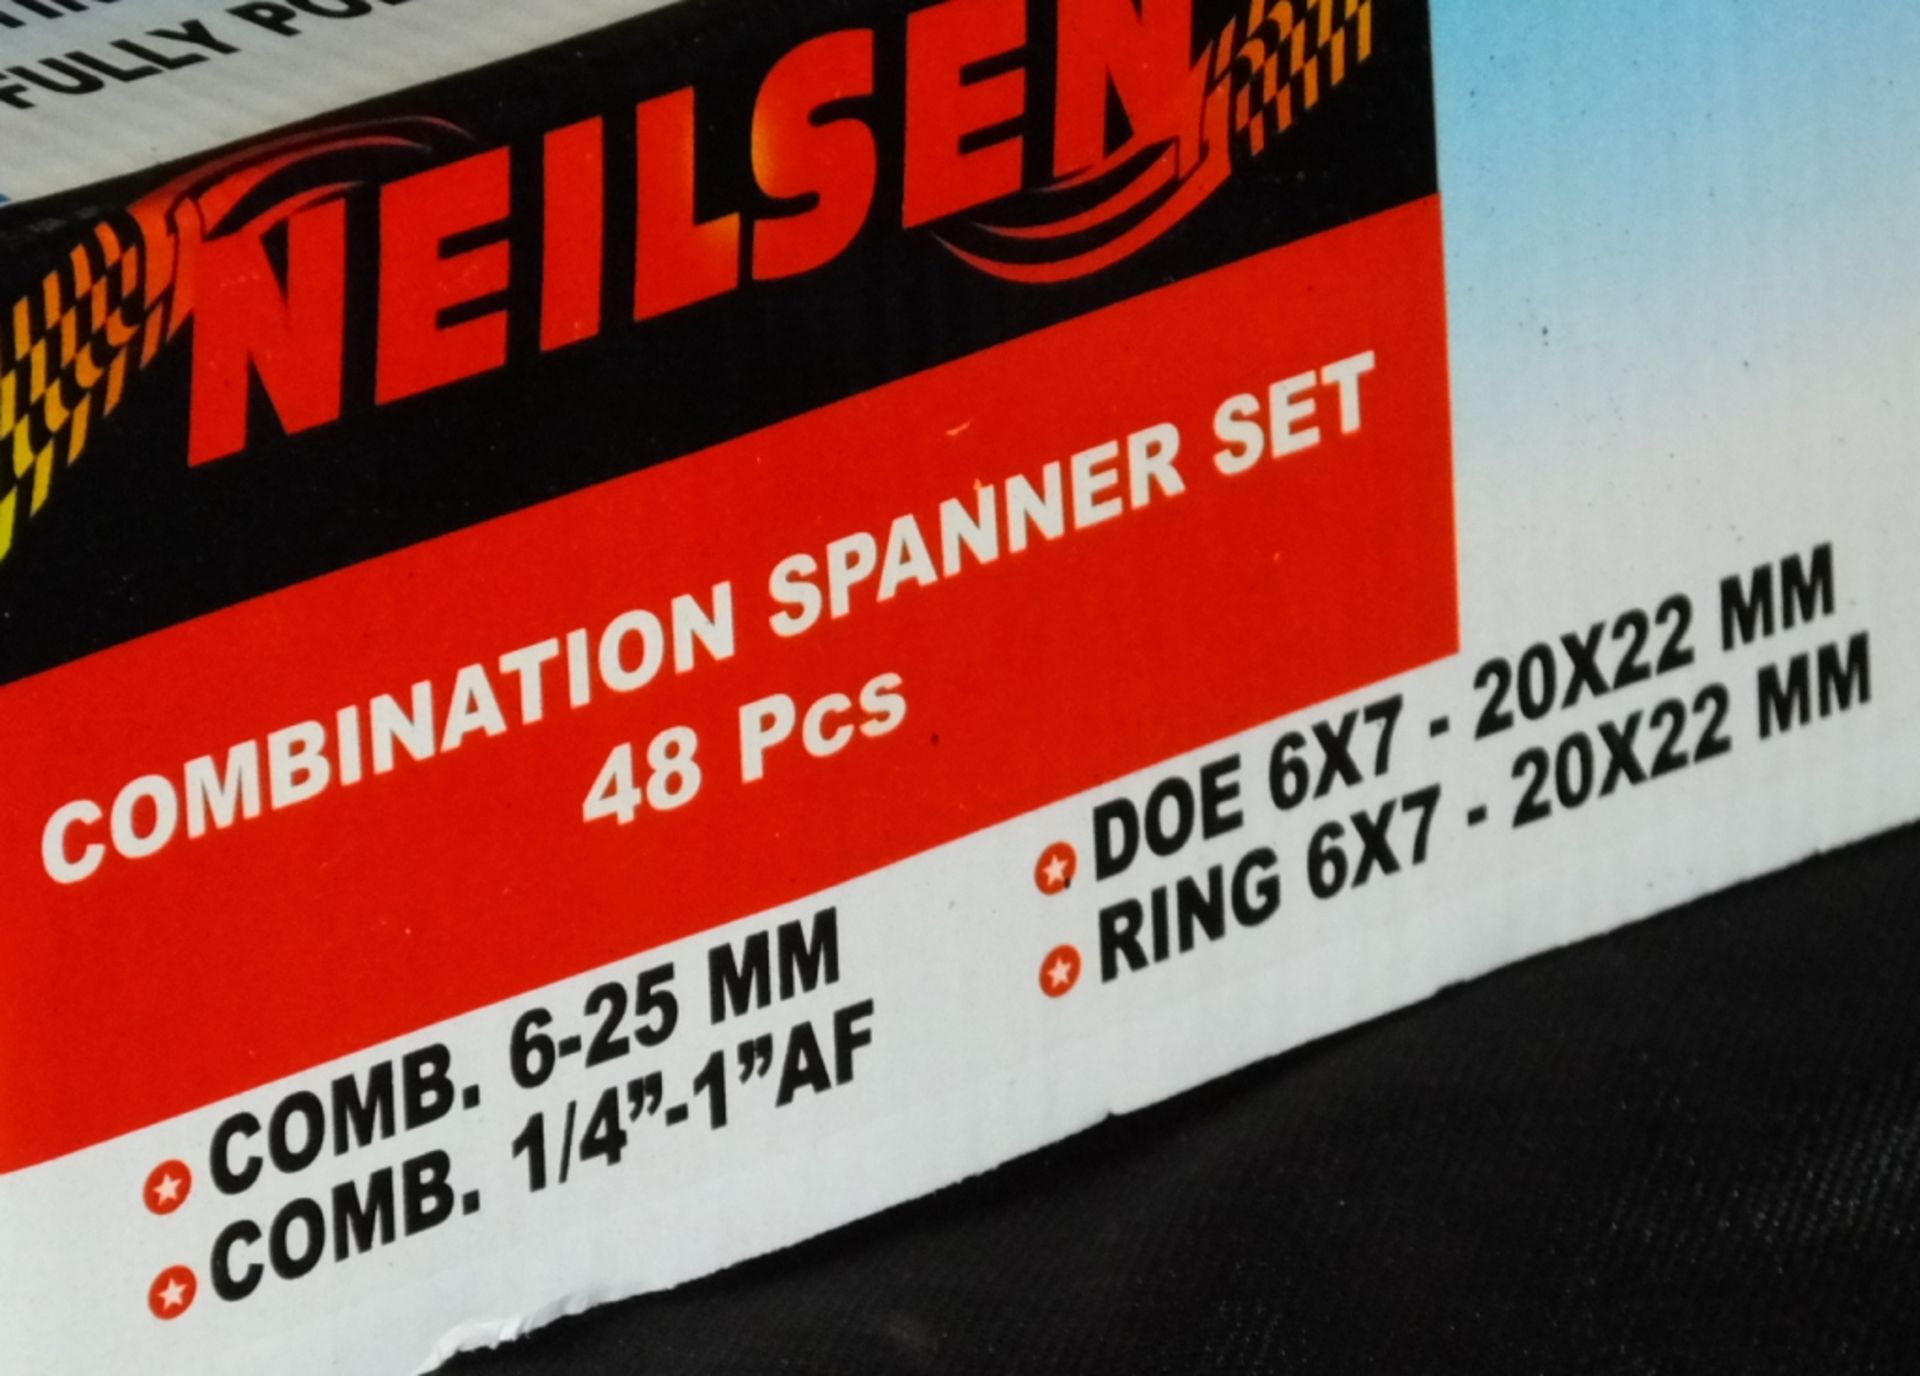 Neilsen combination spanner set 48 piece - Image 3 of 8